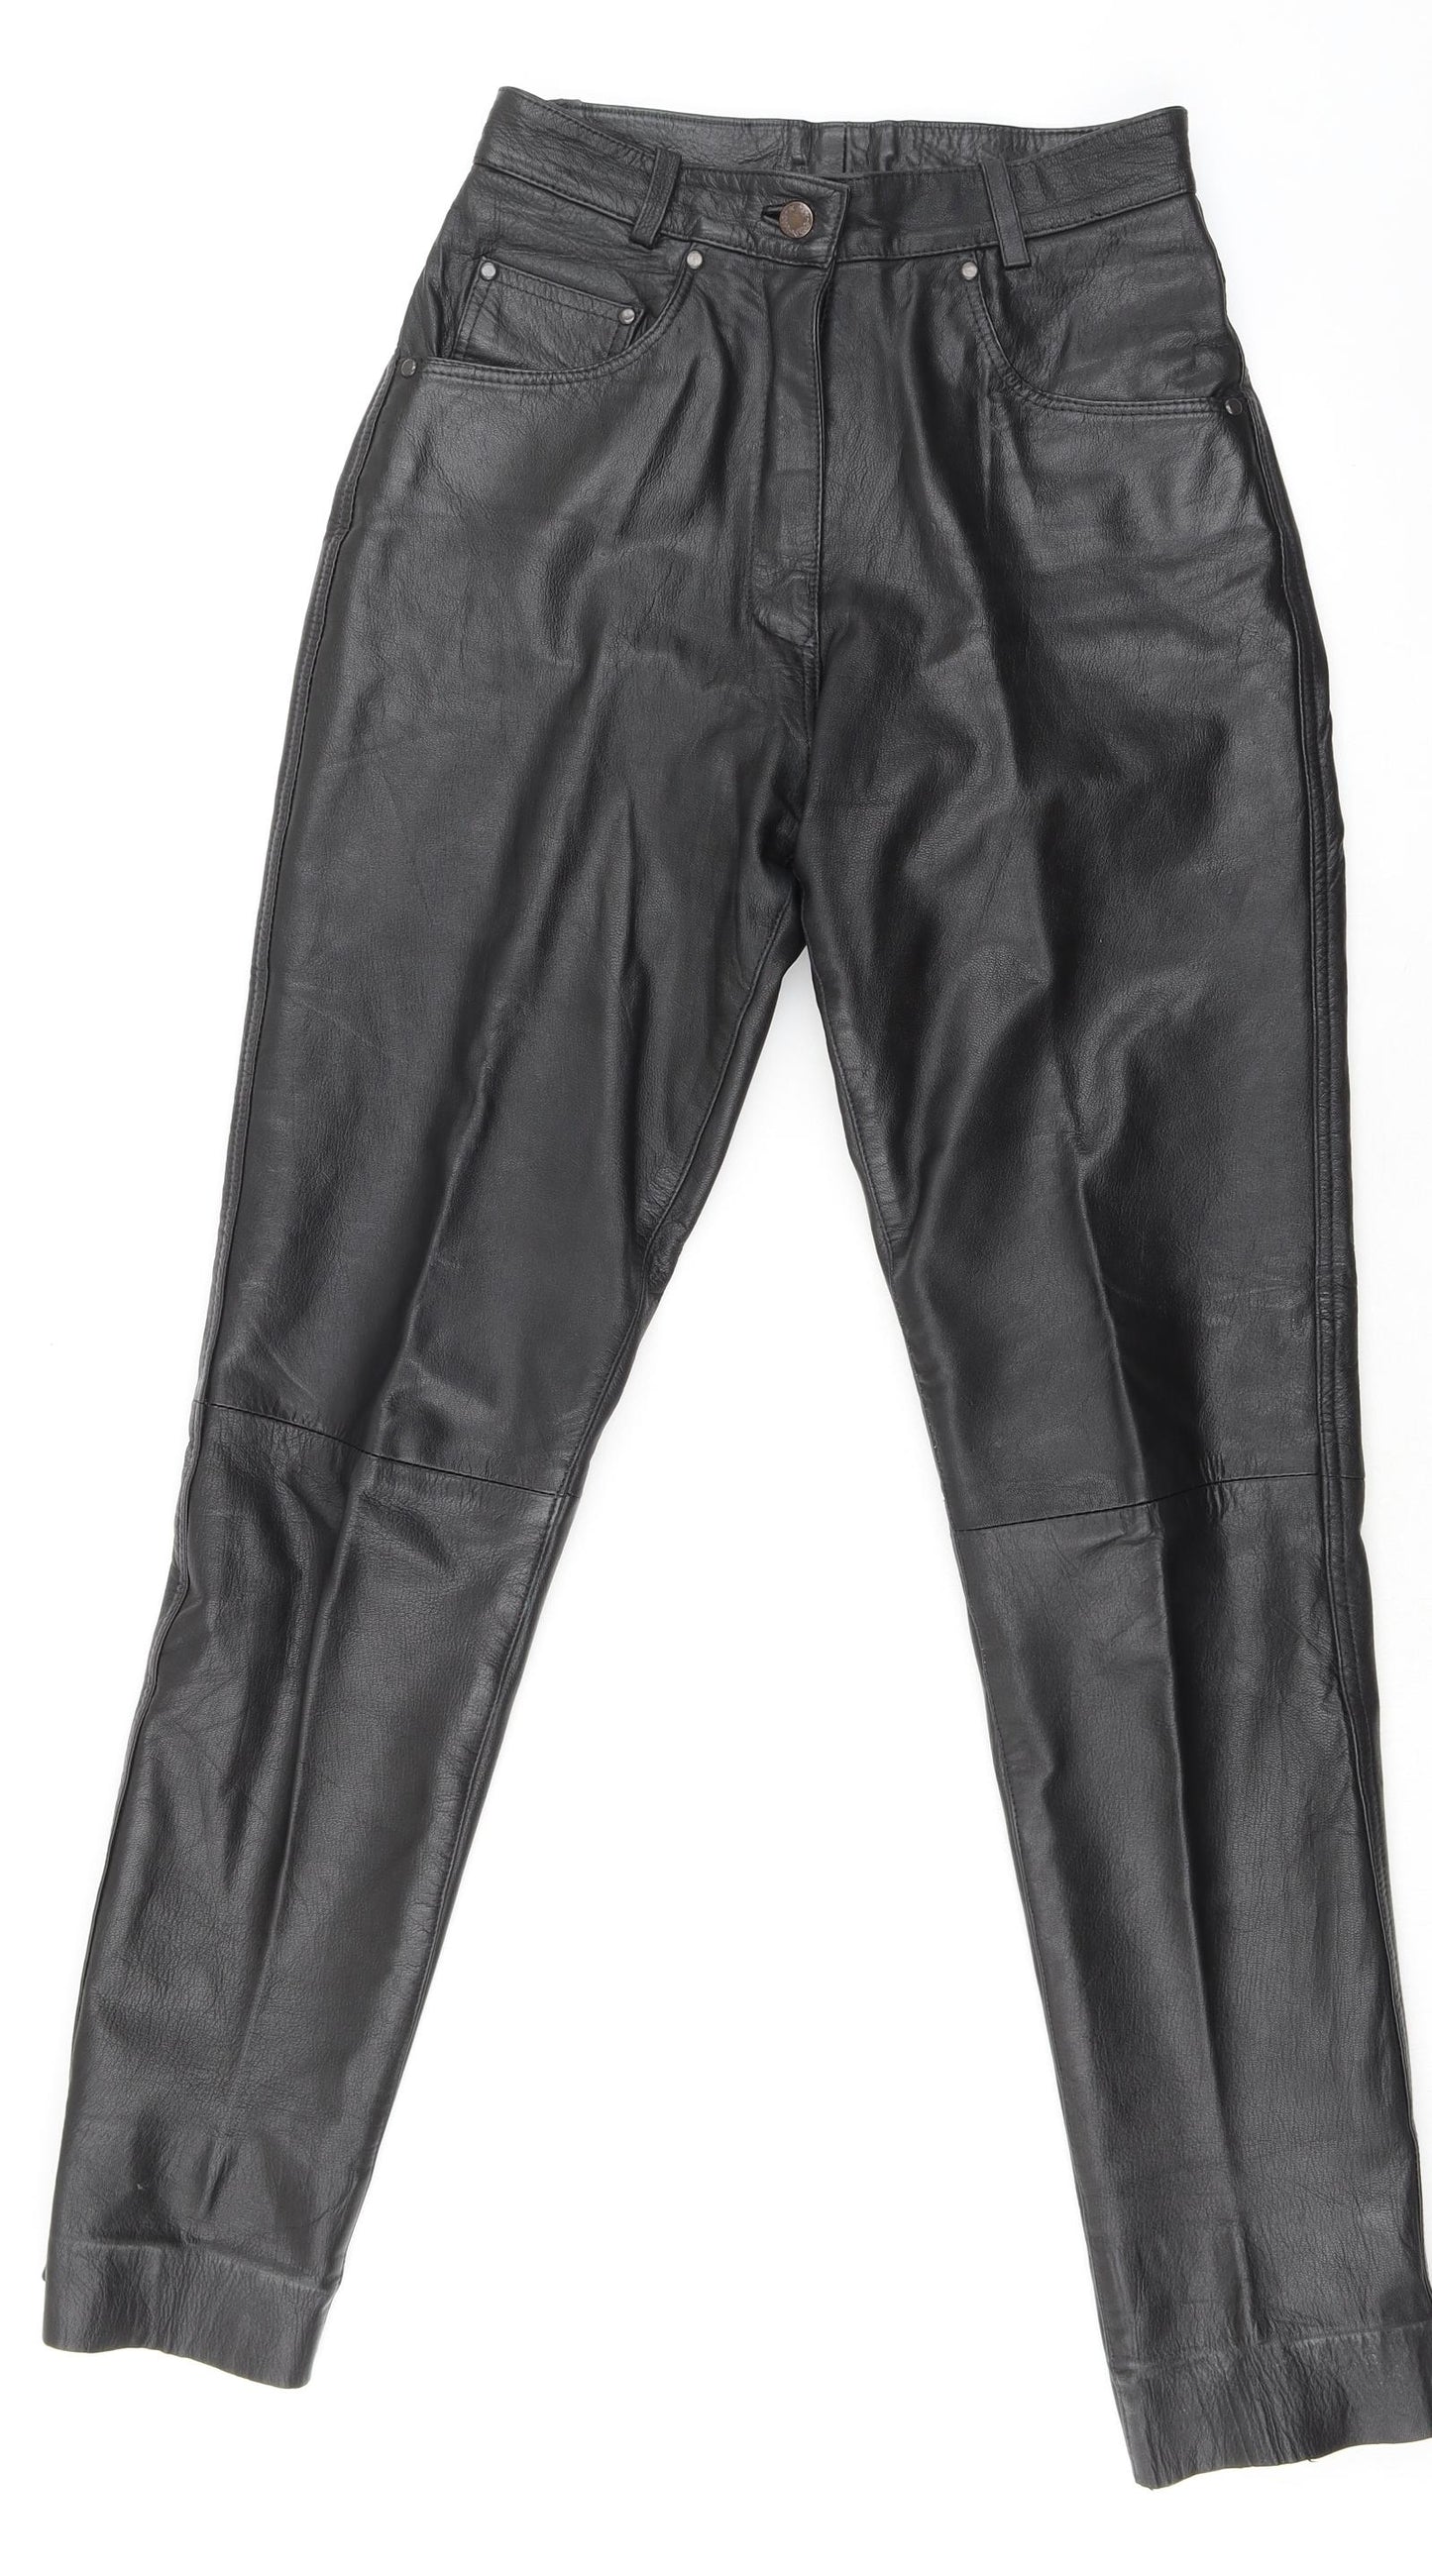 Classic Woman Womens Black Leather Trousers Size 12 L32 in Regular Zip - Raw Hem